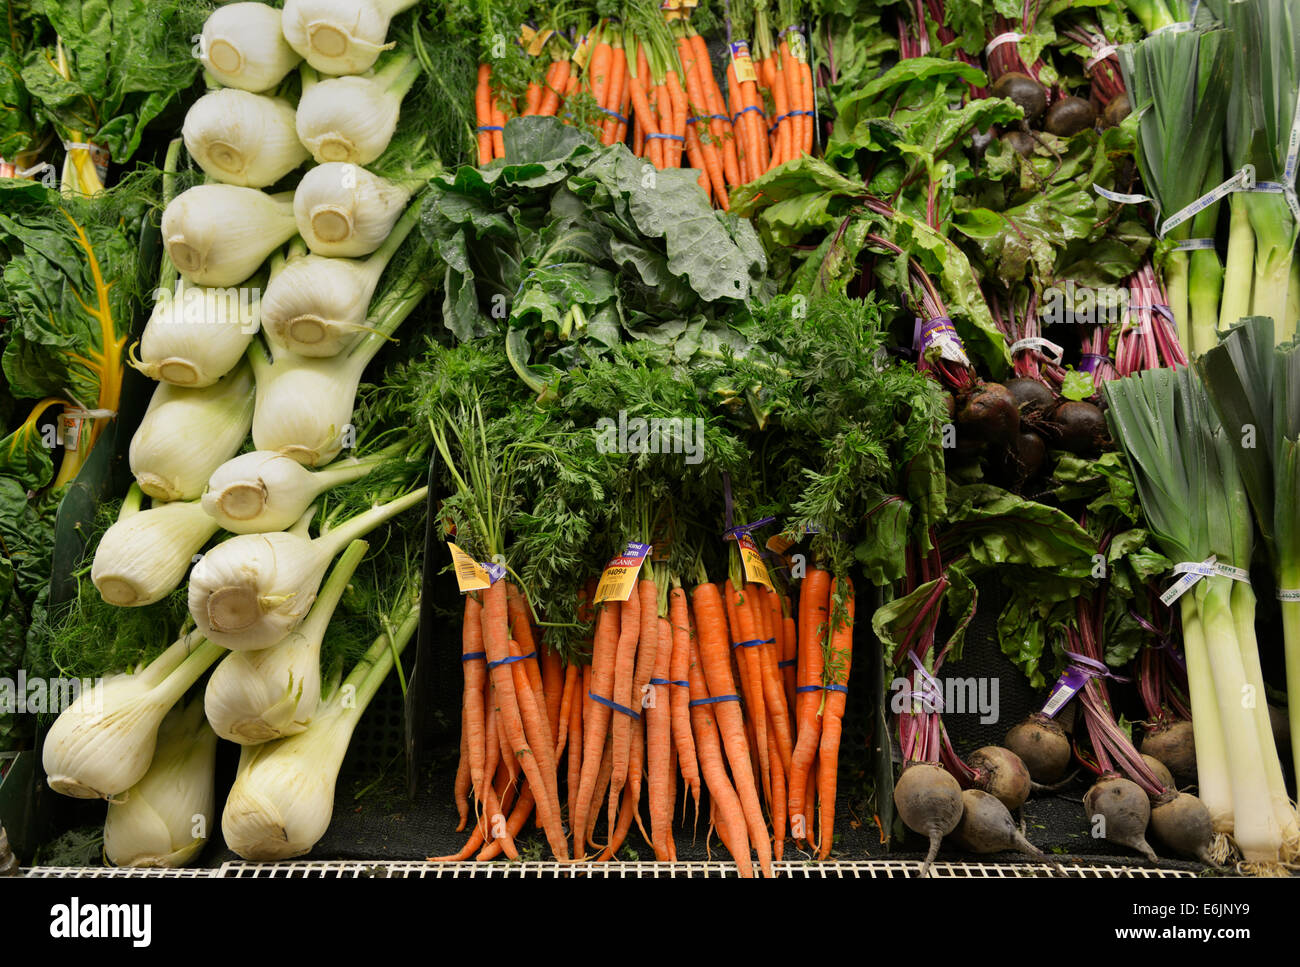 Healthy produce on shelves at a market Stock Photo